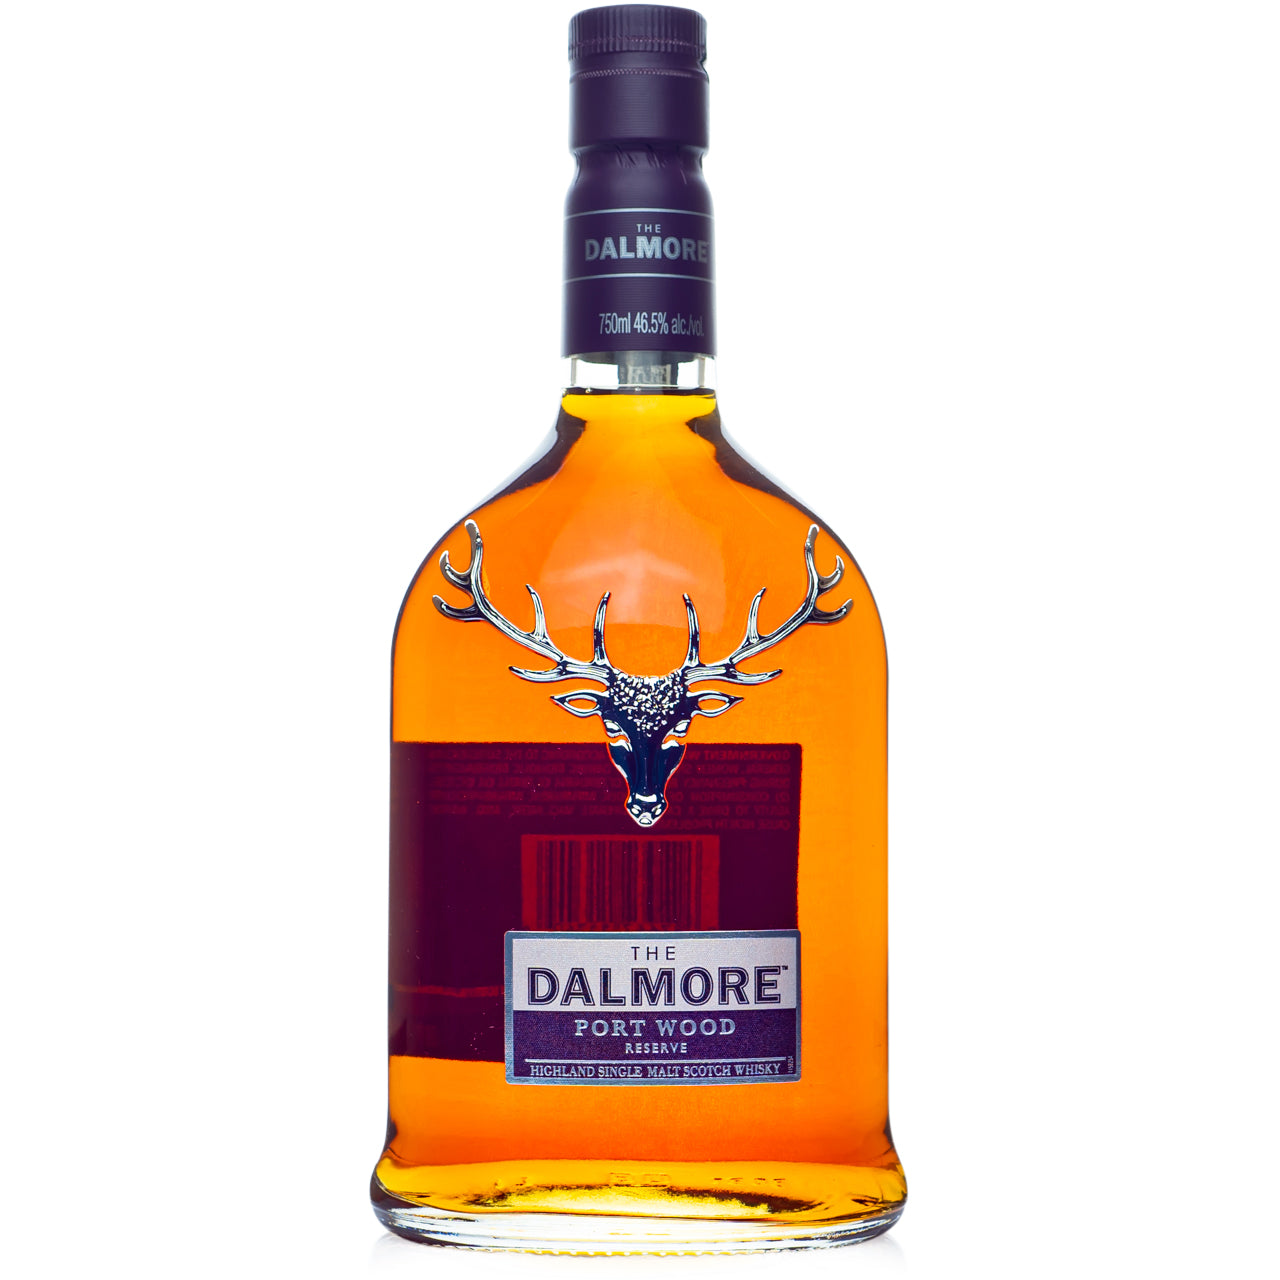 Dalmore Port Wood Reserve Single Malt Scotch